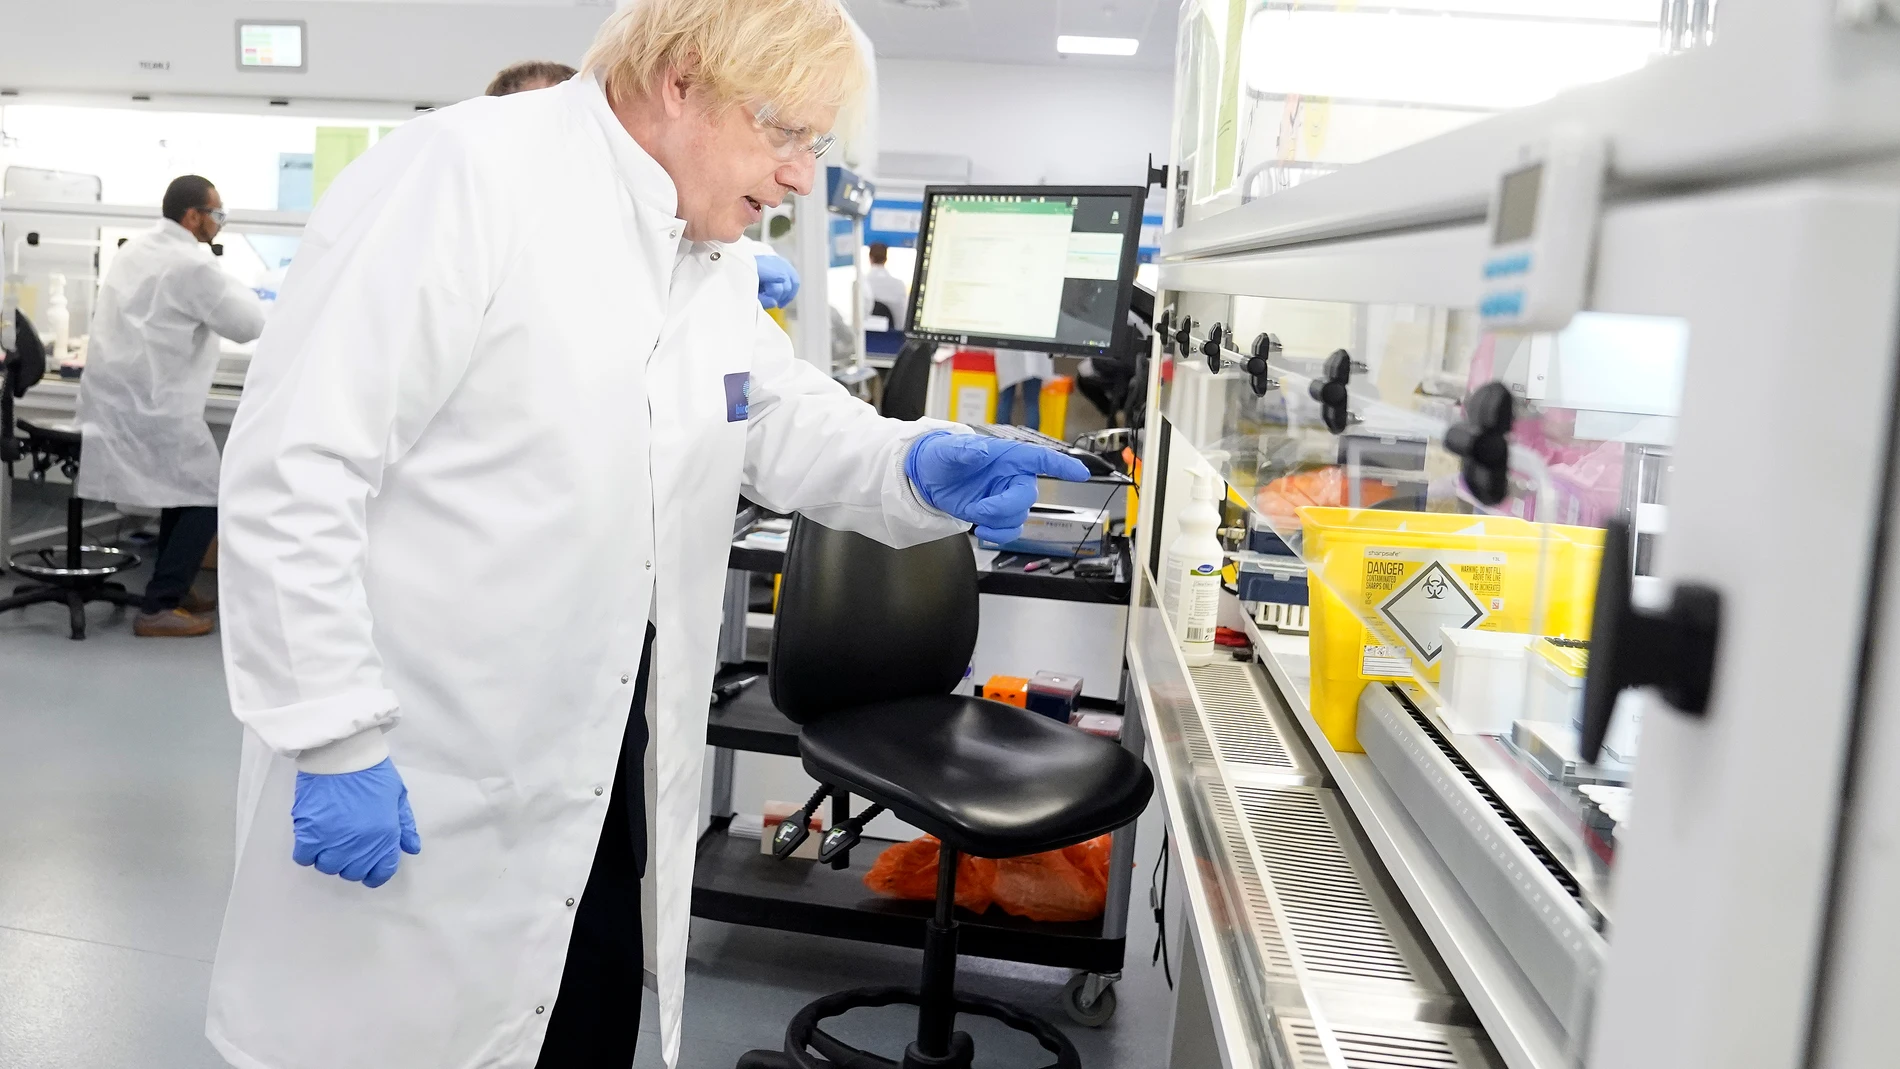 UK Prime Minister visits National Biosample Centre in London